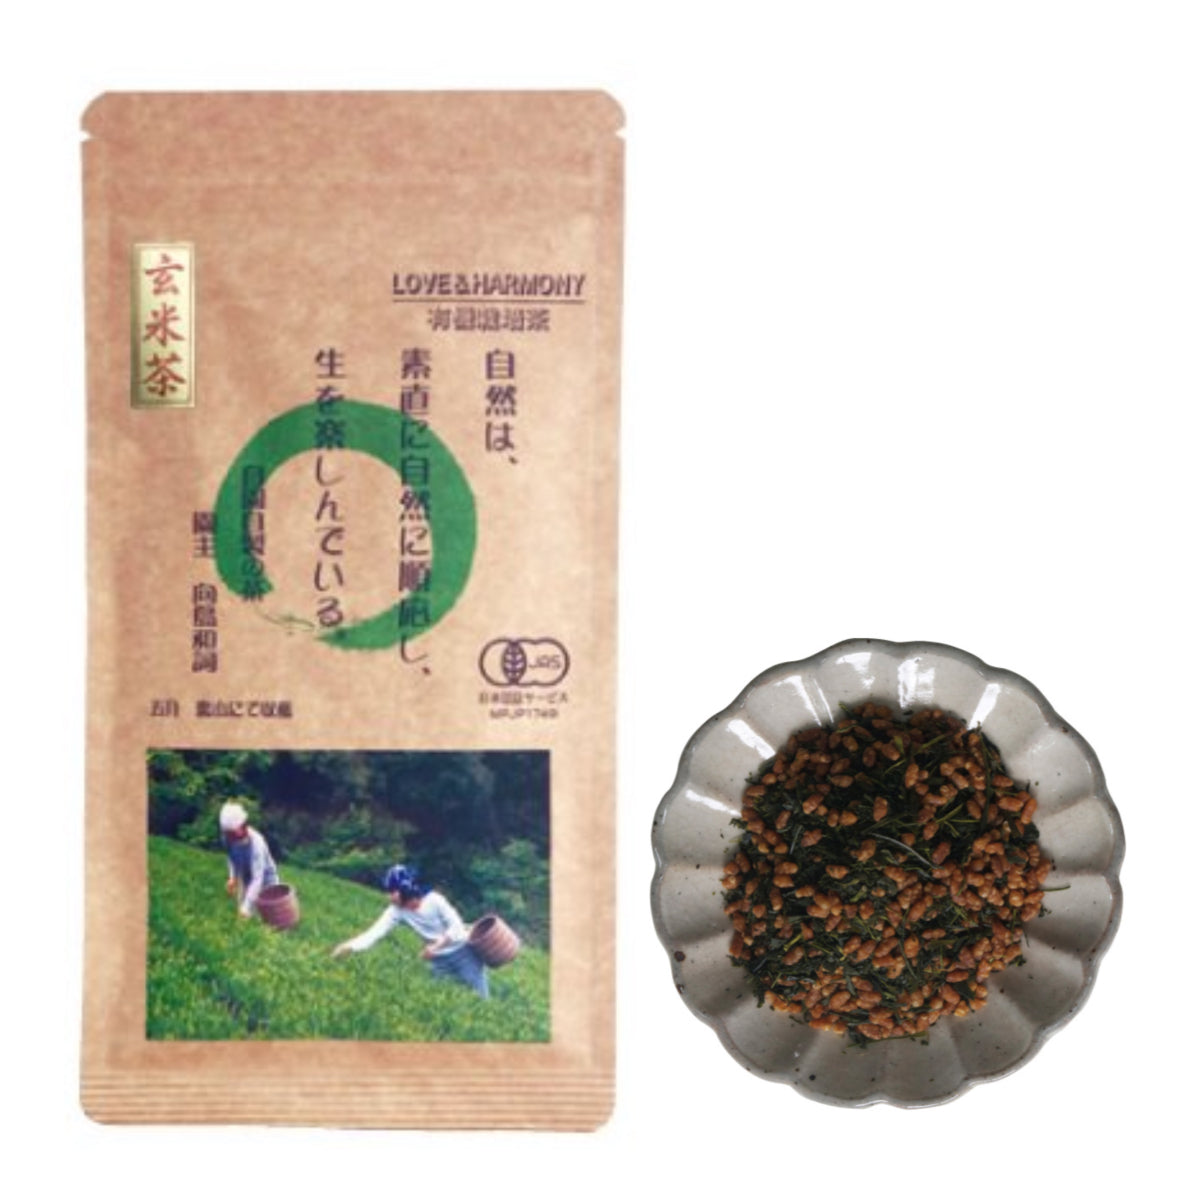 Brown Rice Tea "Genmaicha" 80g/2.82oz